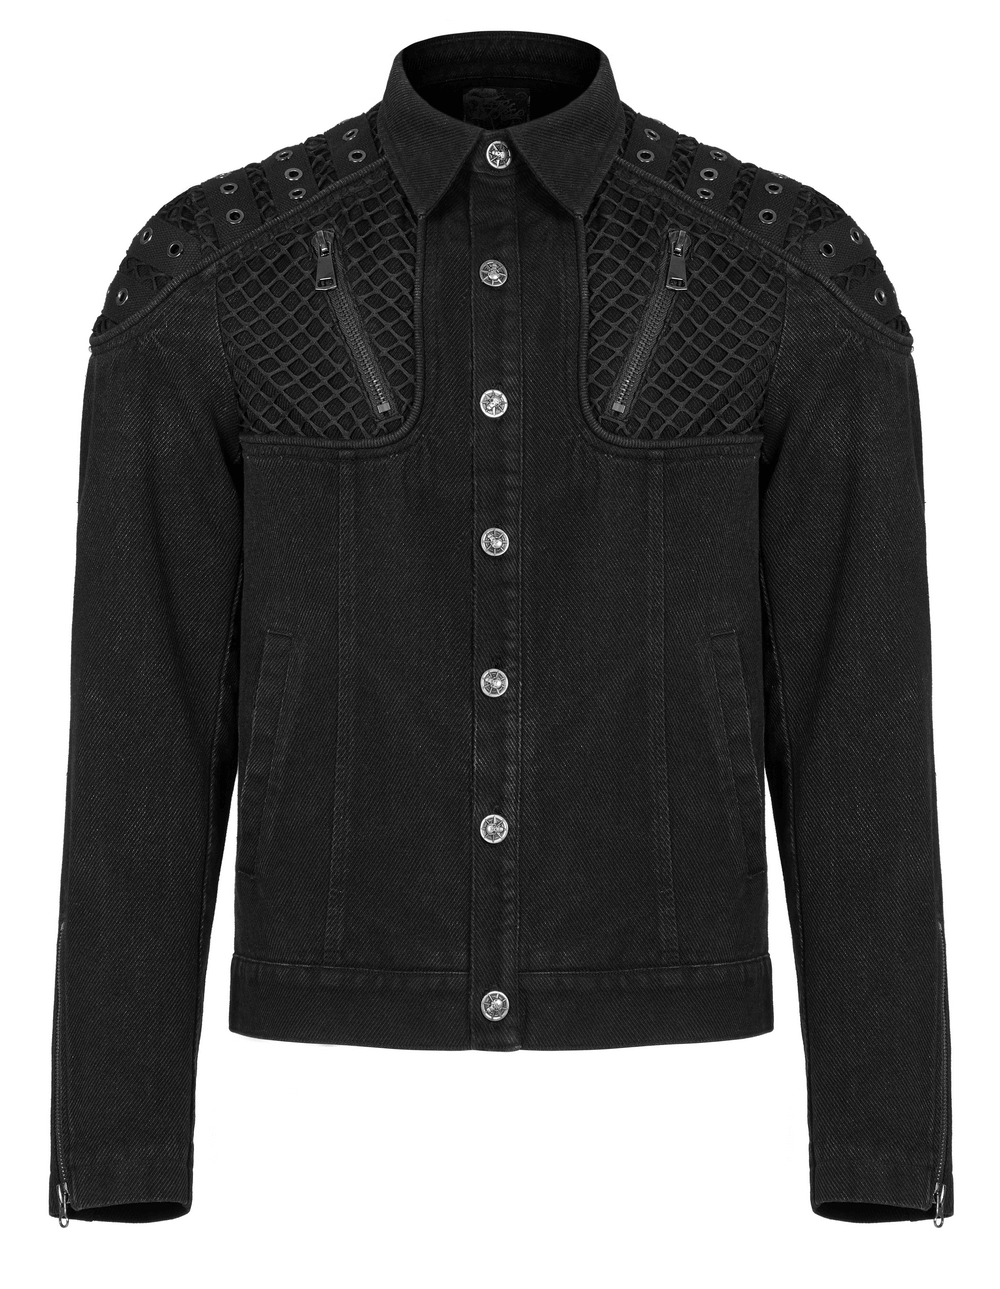 Men's Jackets: Denim, Leather, Biker - Rugged and Stylish